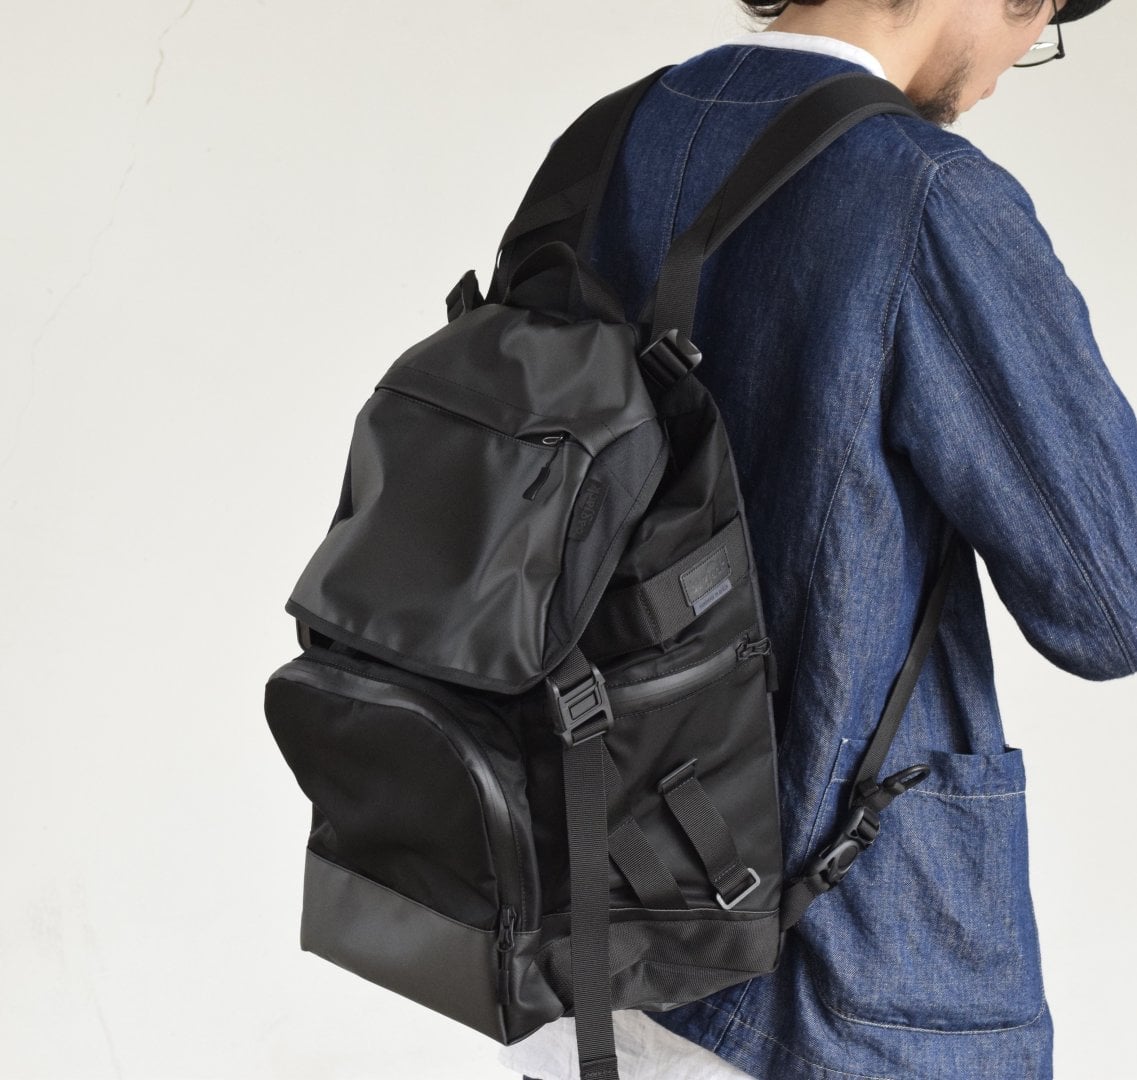 # Bag Yourself 024：看膩普通的 Daypack 了嗎？那就來顆掀蓋式後背包吧！ 8